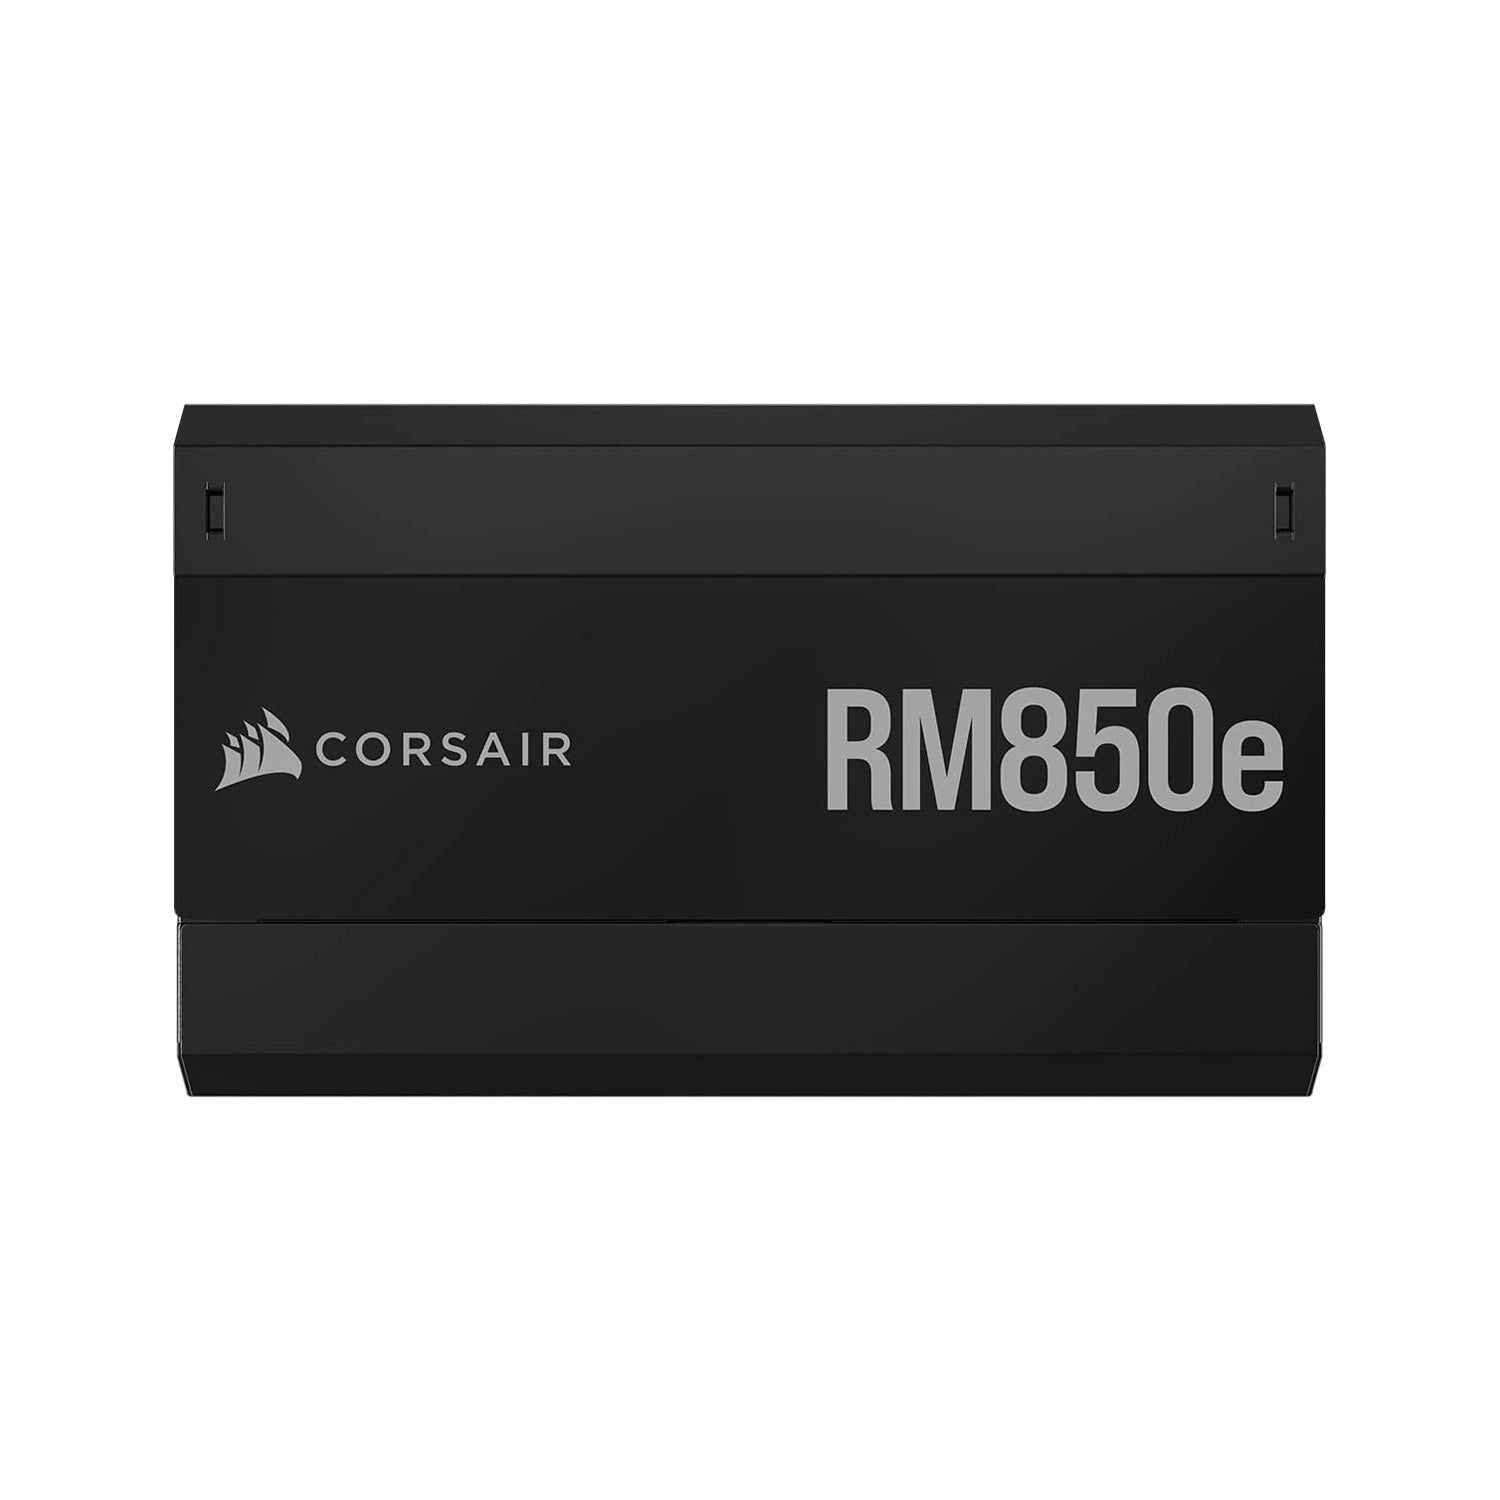 CORSAIR RMe Series, RM 850e, 80+ Gold - OVERCLOCK Computer